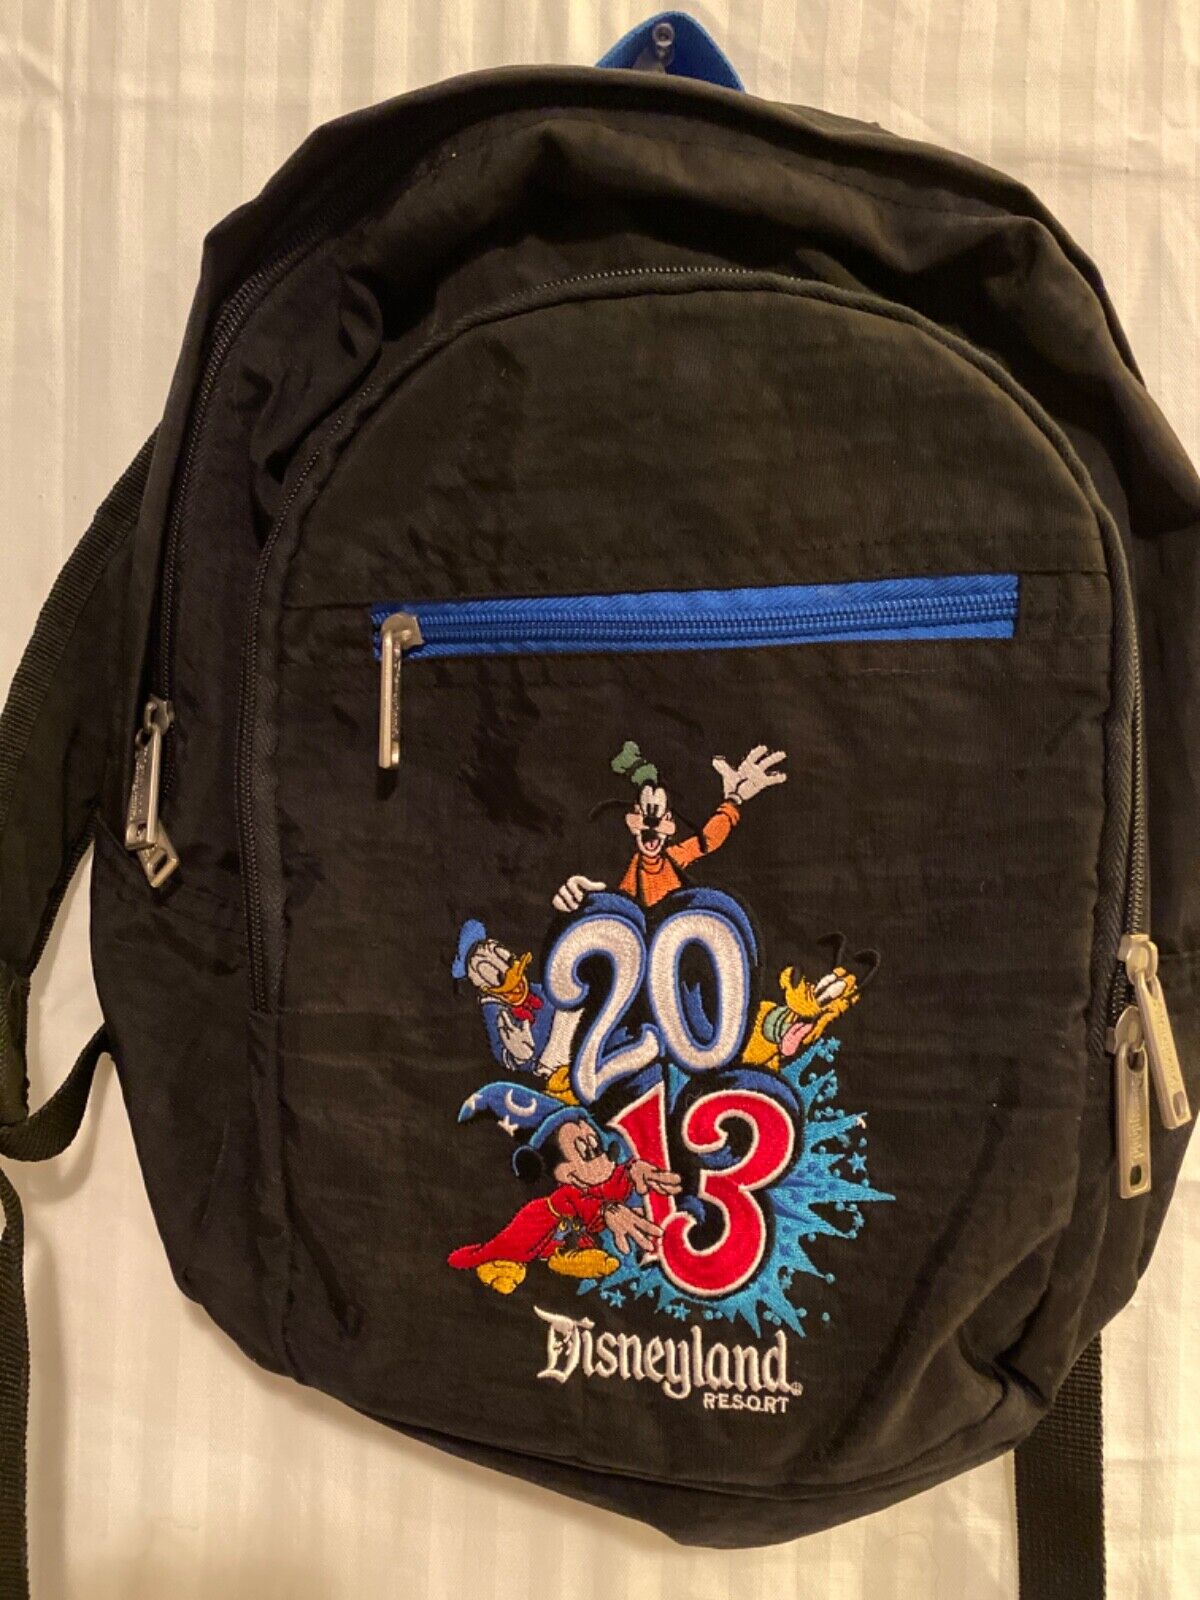 Disneyland Resort Authentic Vintage 2013 backpack